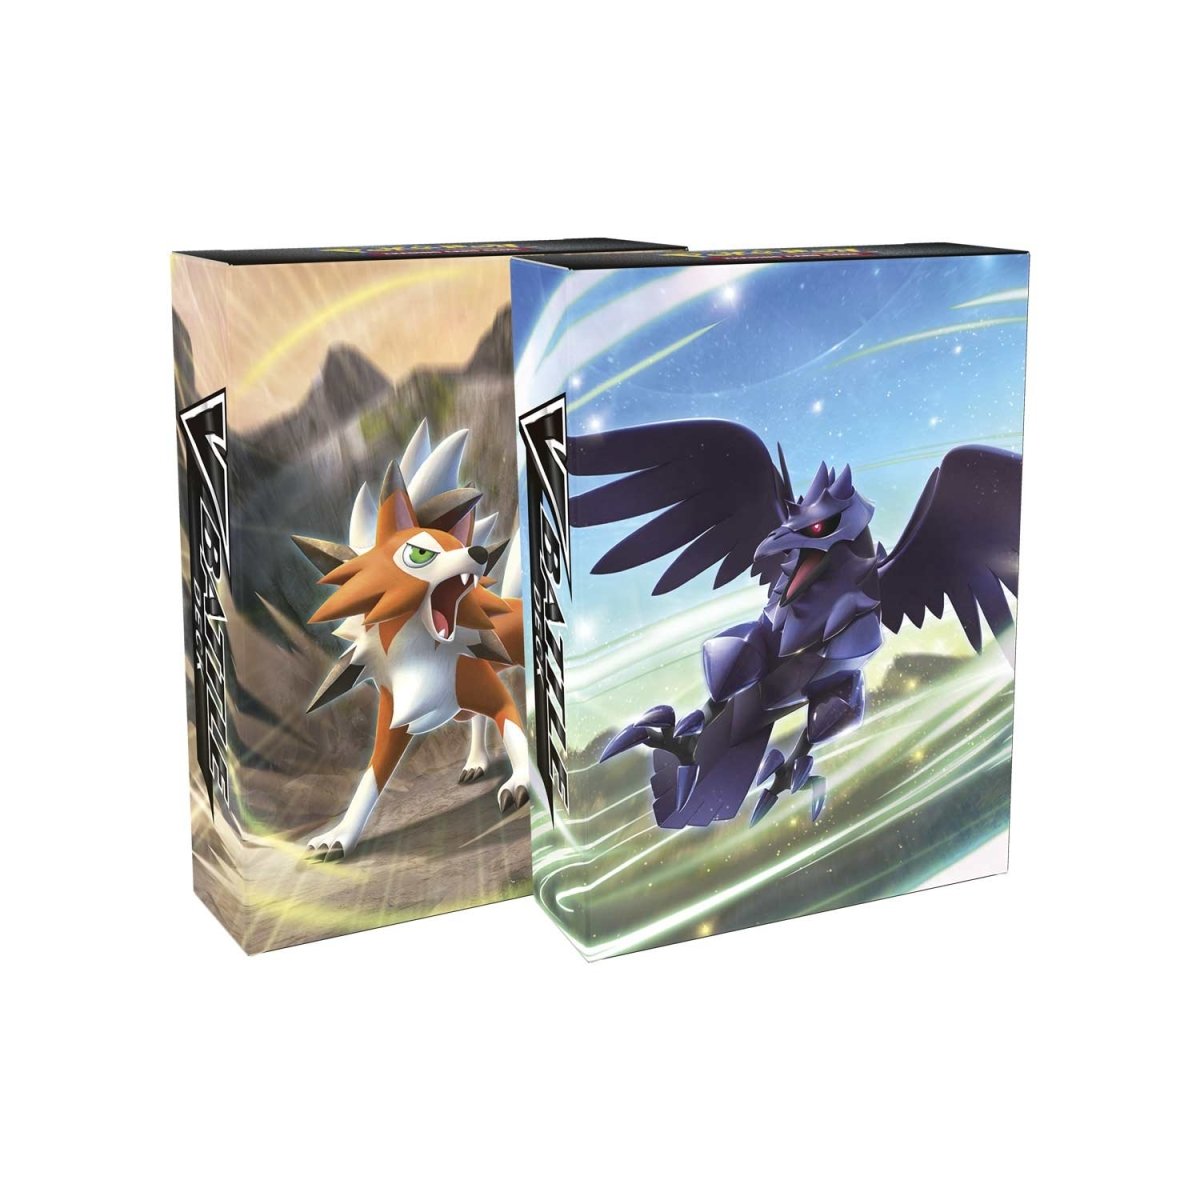 Card Game Pokémon Baralho Batalha V Lycanroc - Copag